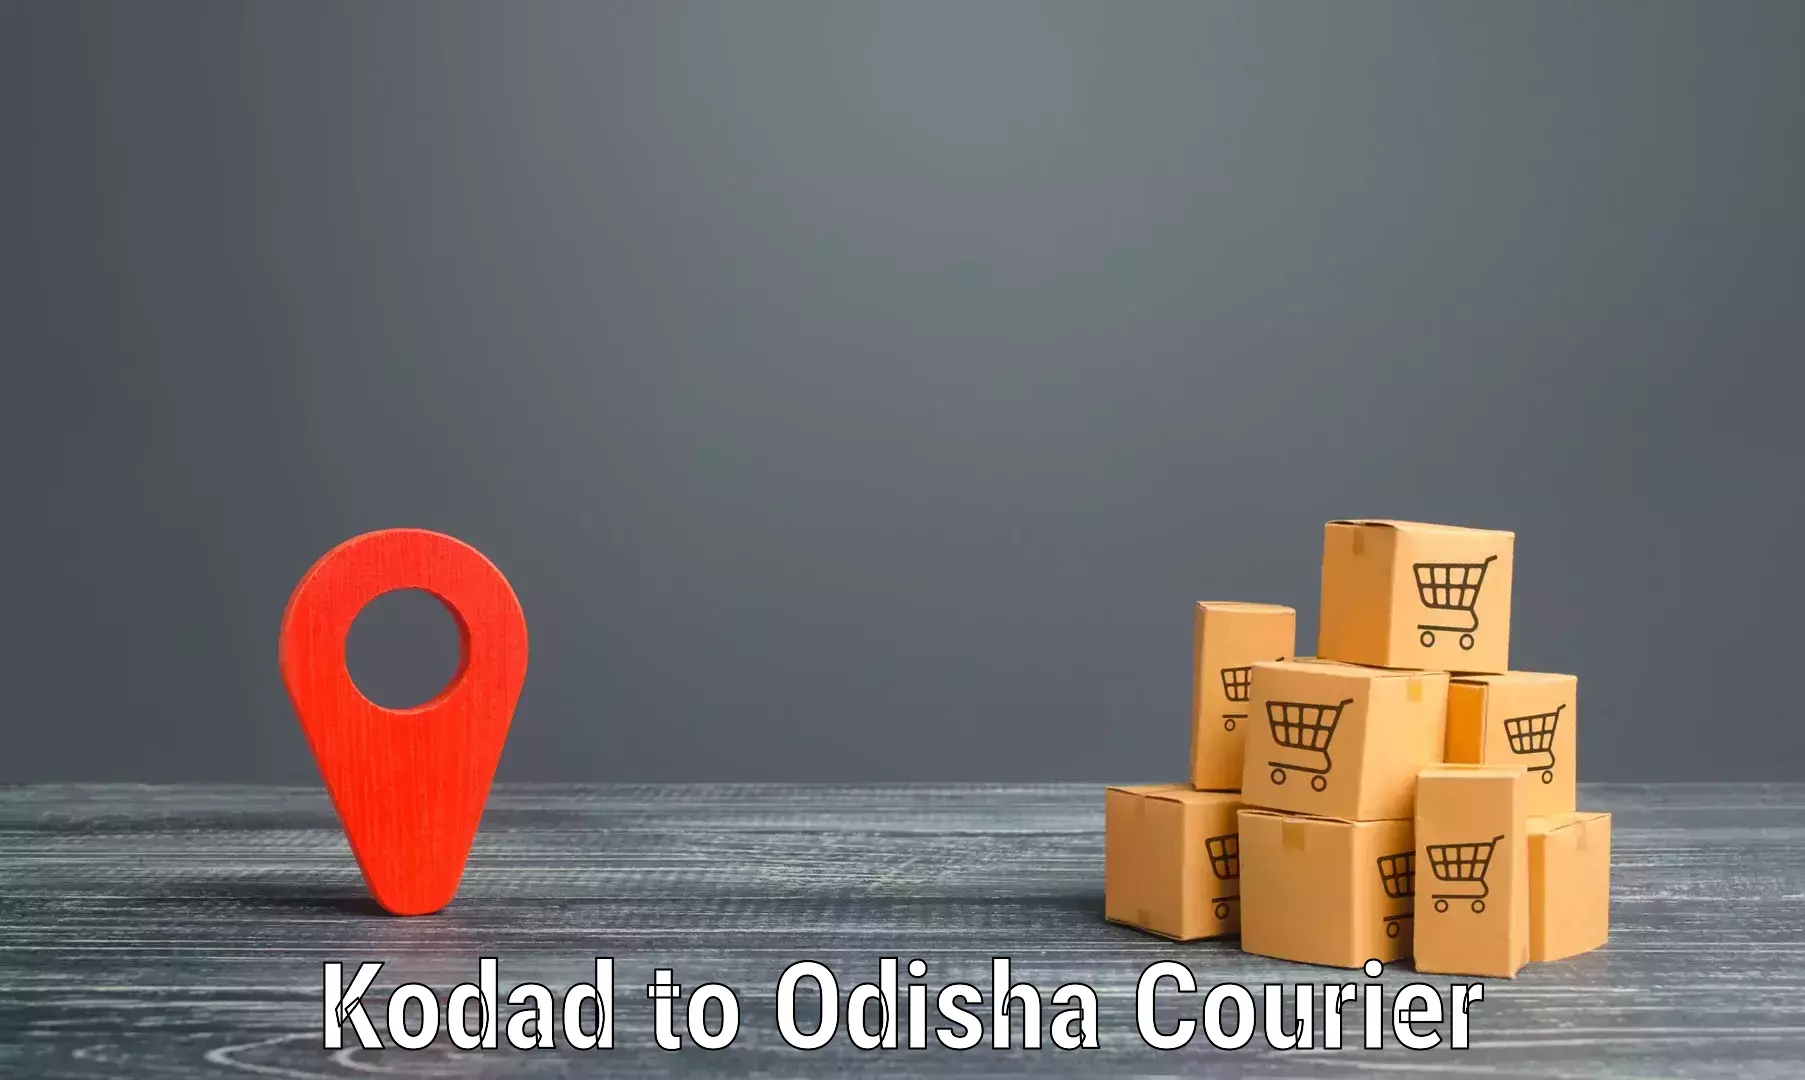 Sustainable shipping practices in Kodad to Kishorenagar